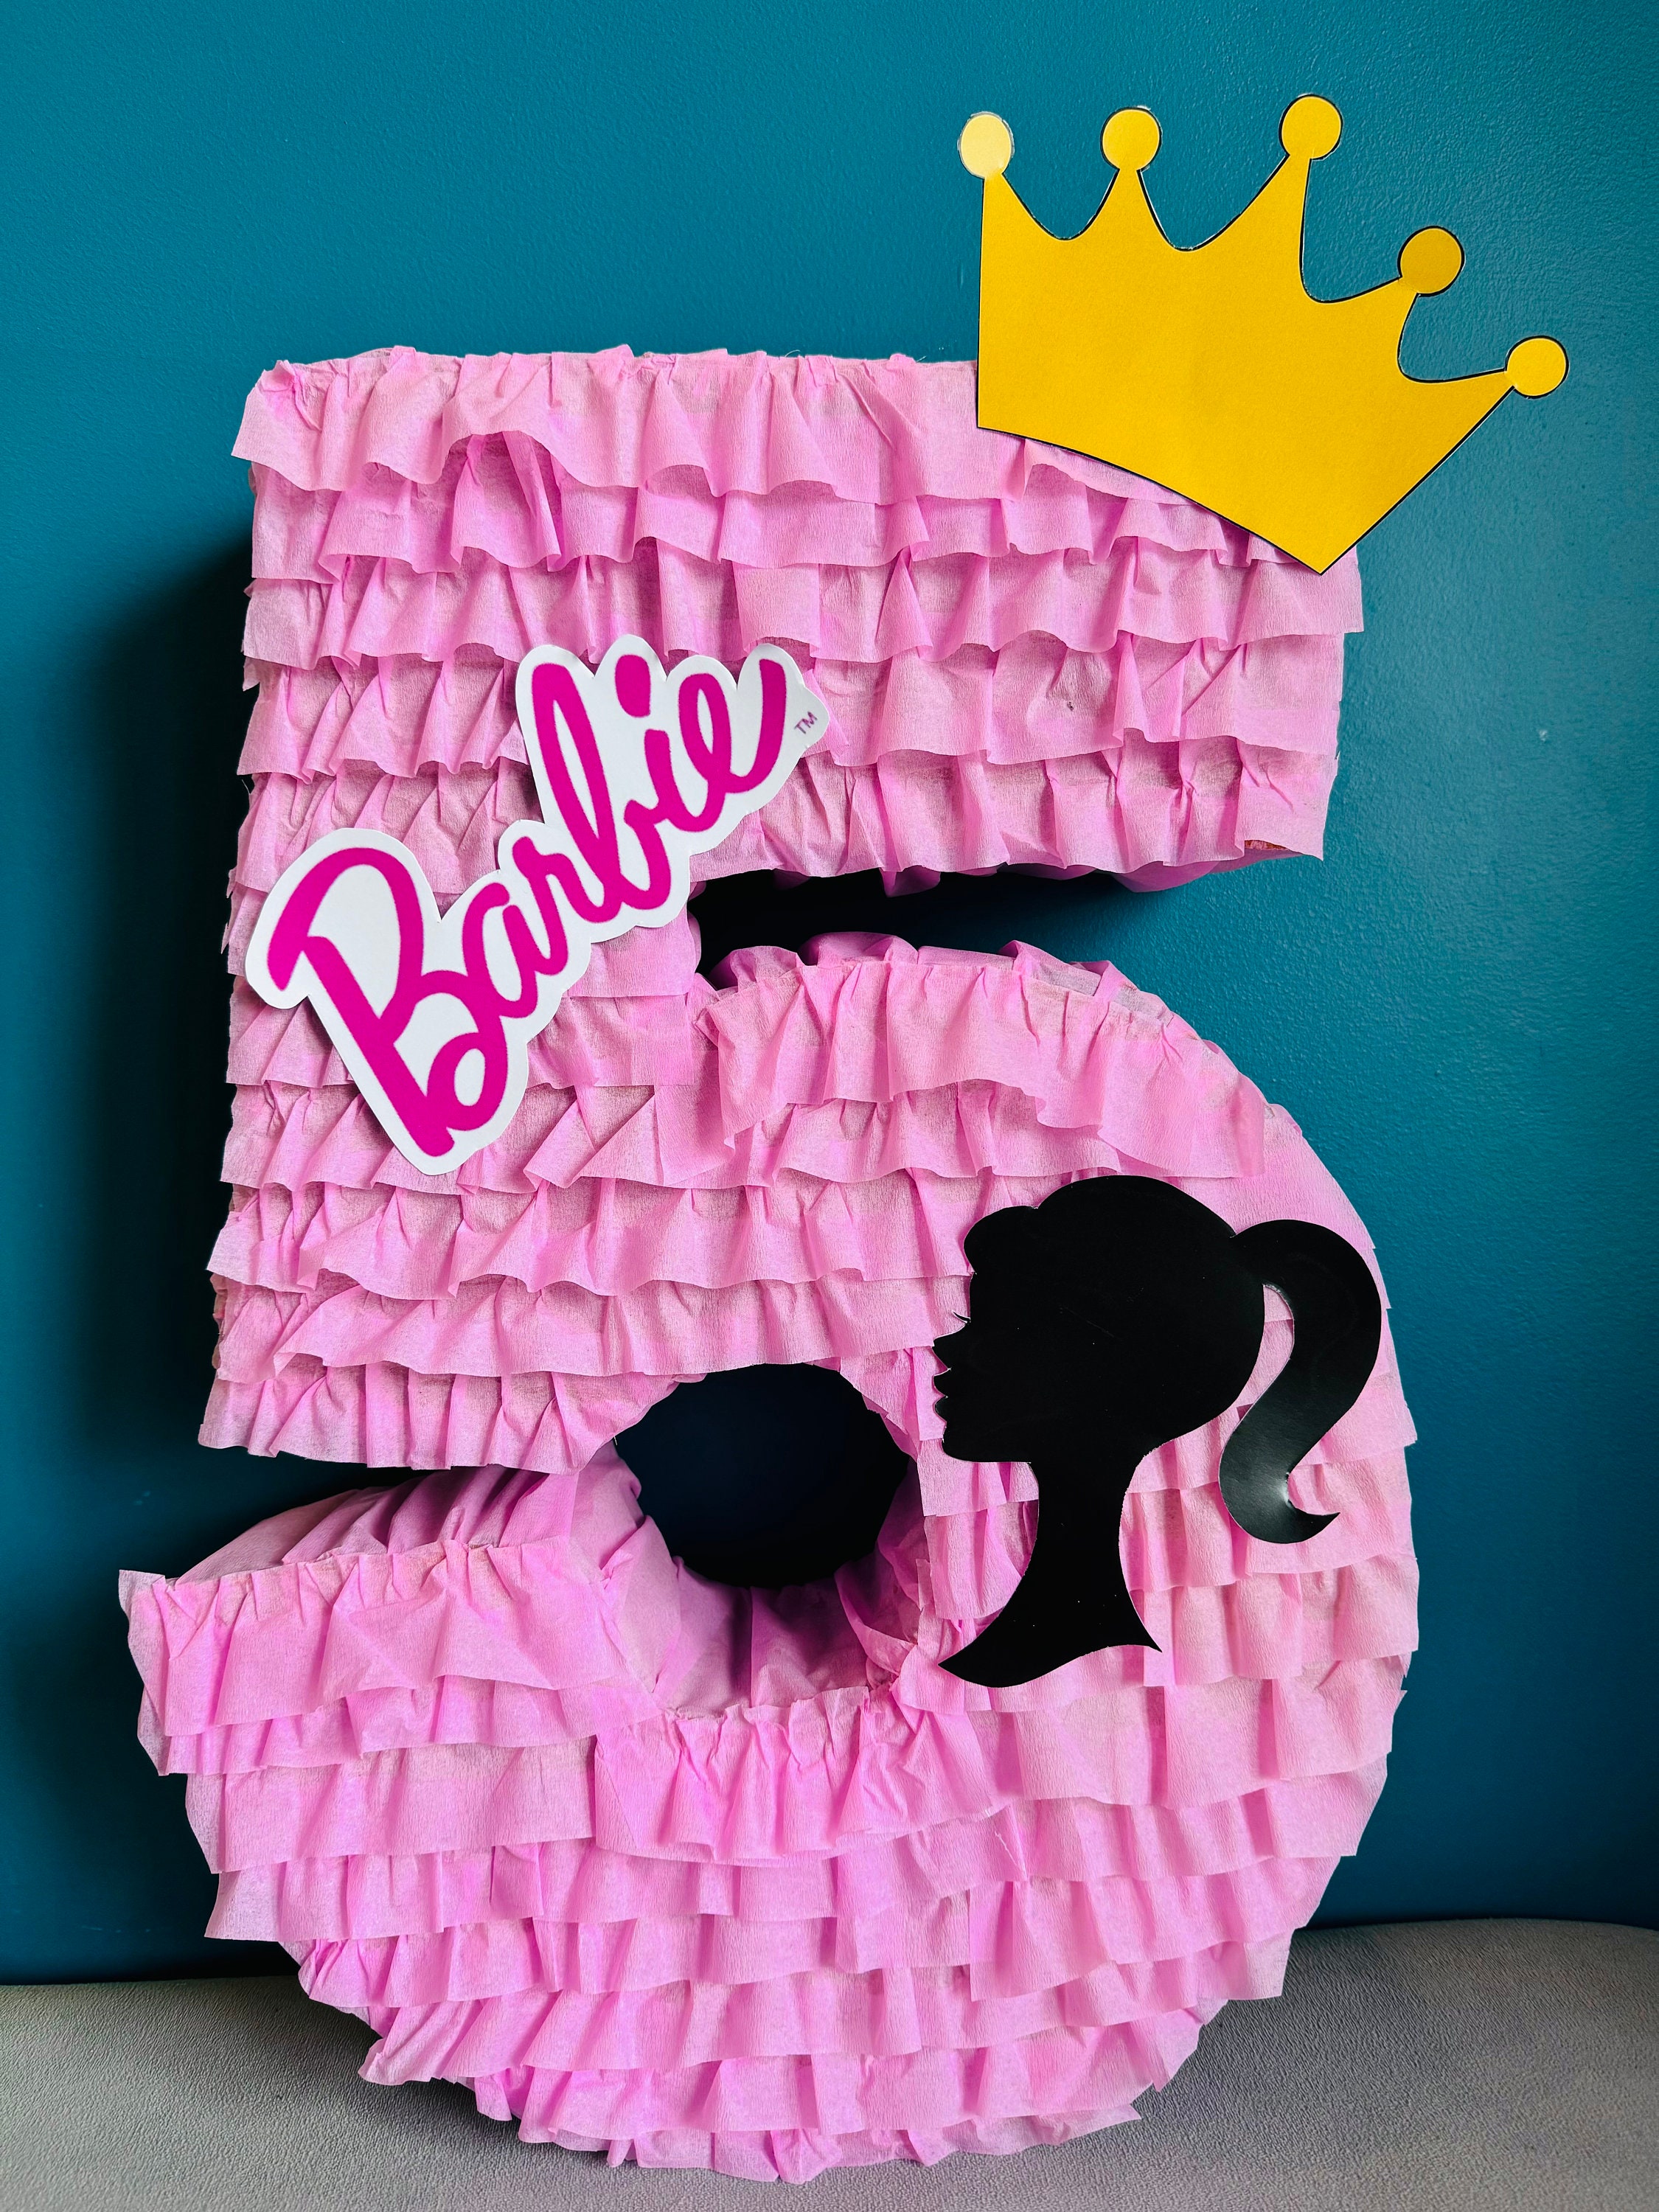 Barbie themed pinata